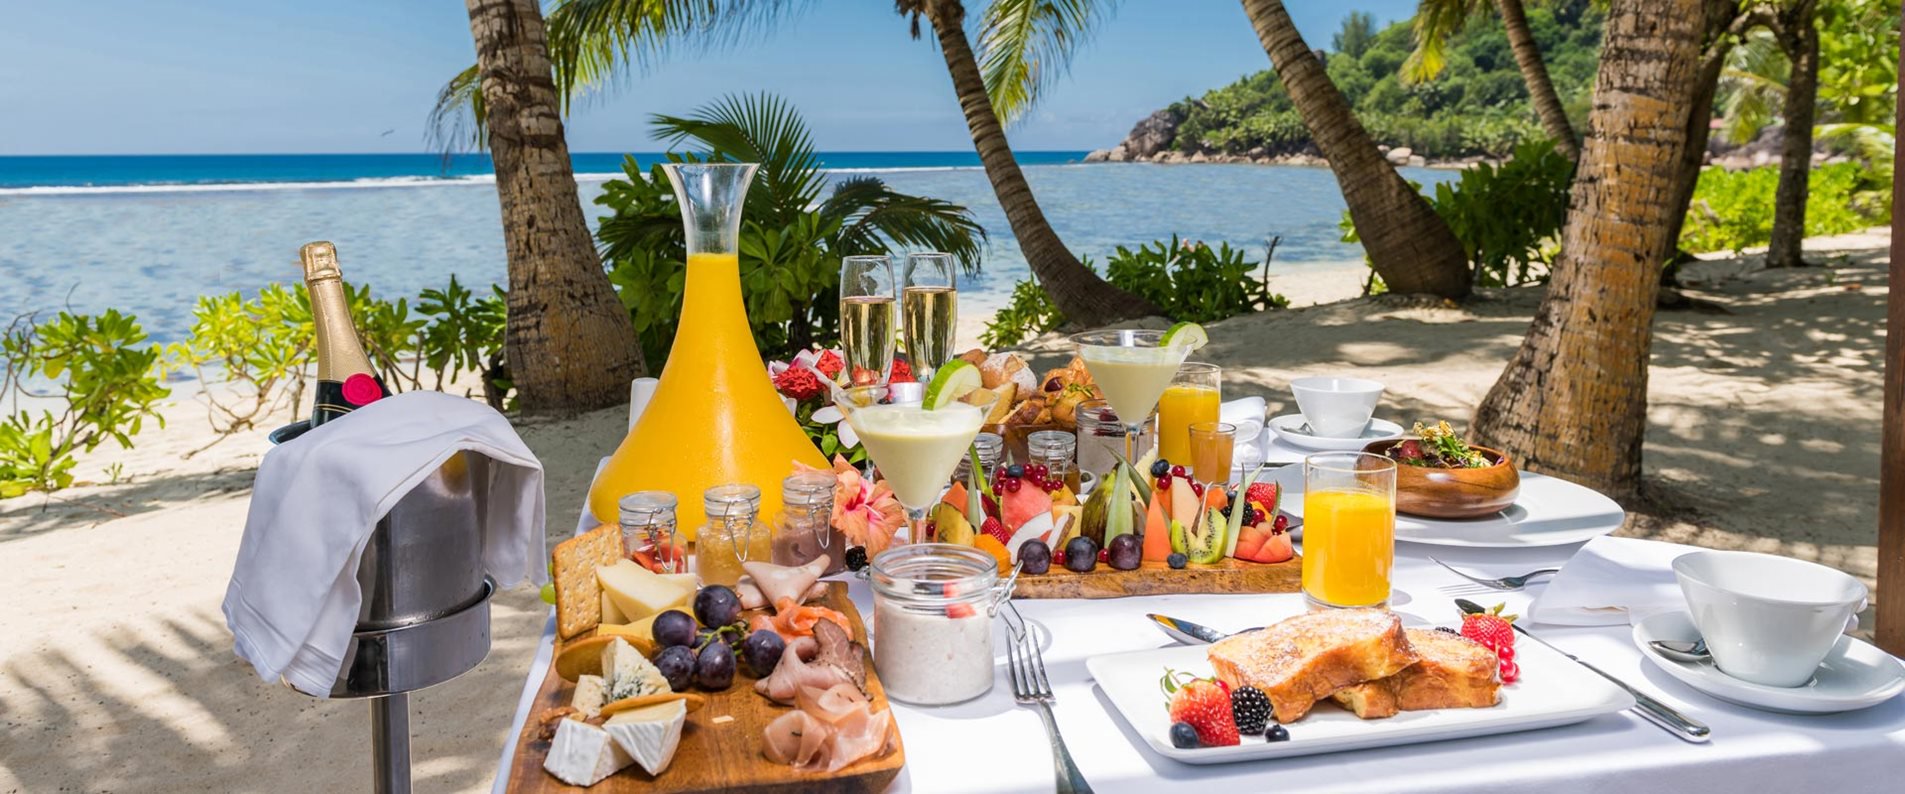 d_kempinski-seychelles_breakfast-on-the-beach-close-up.jpg